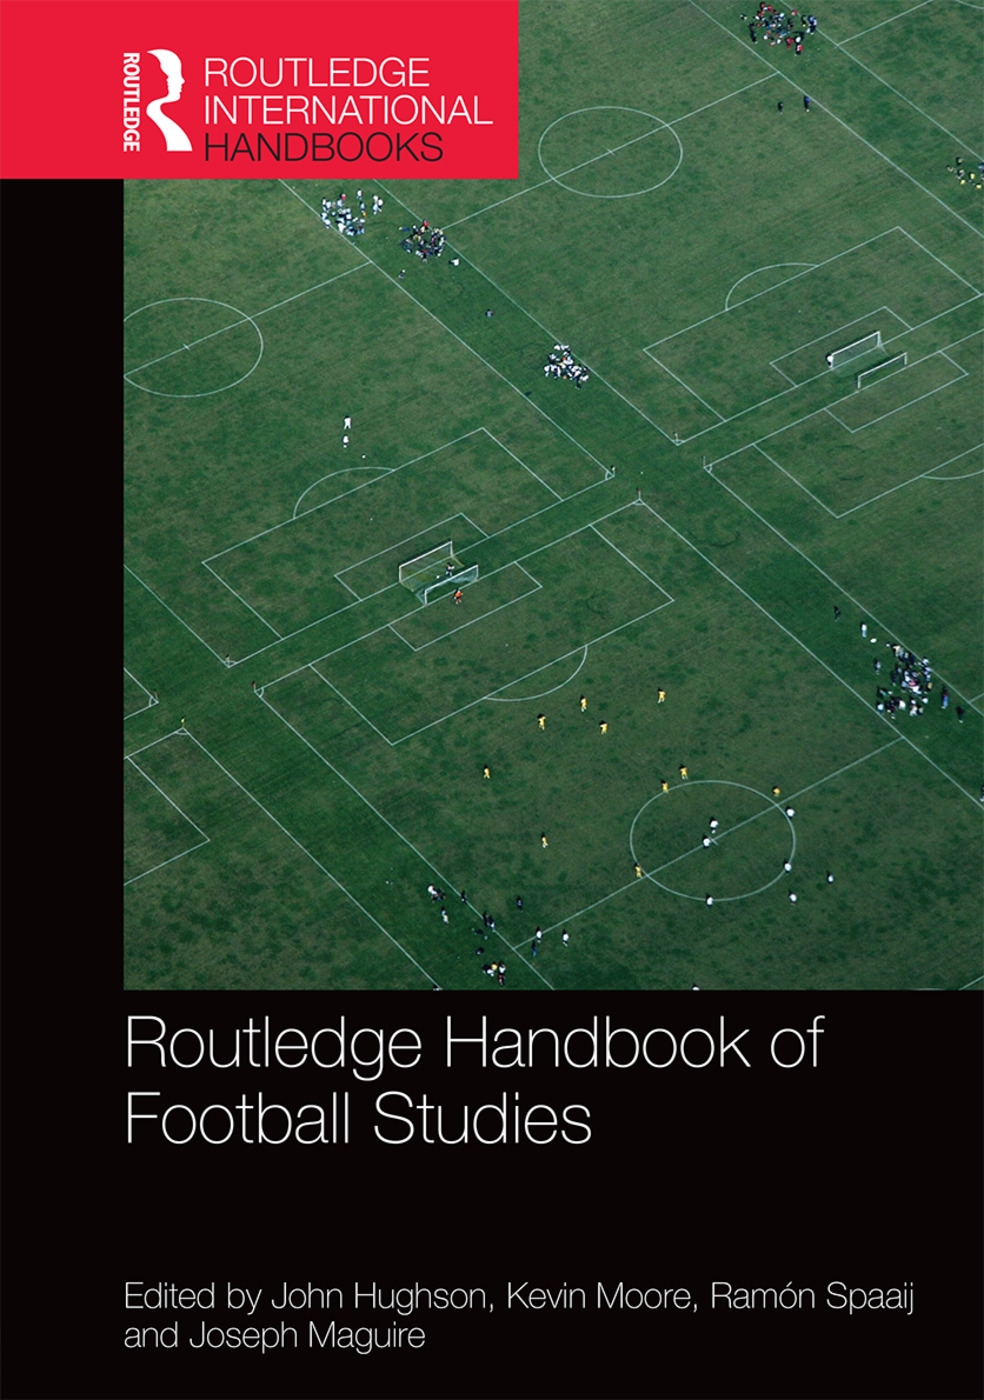 Routledge Handbook of Football Studies